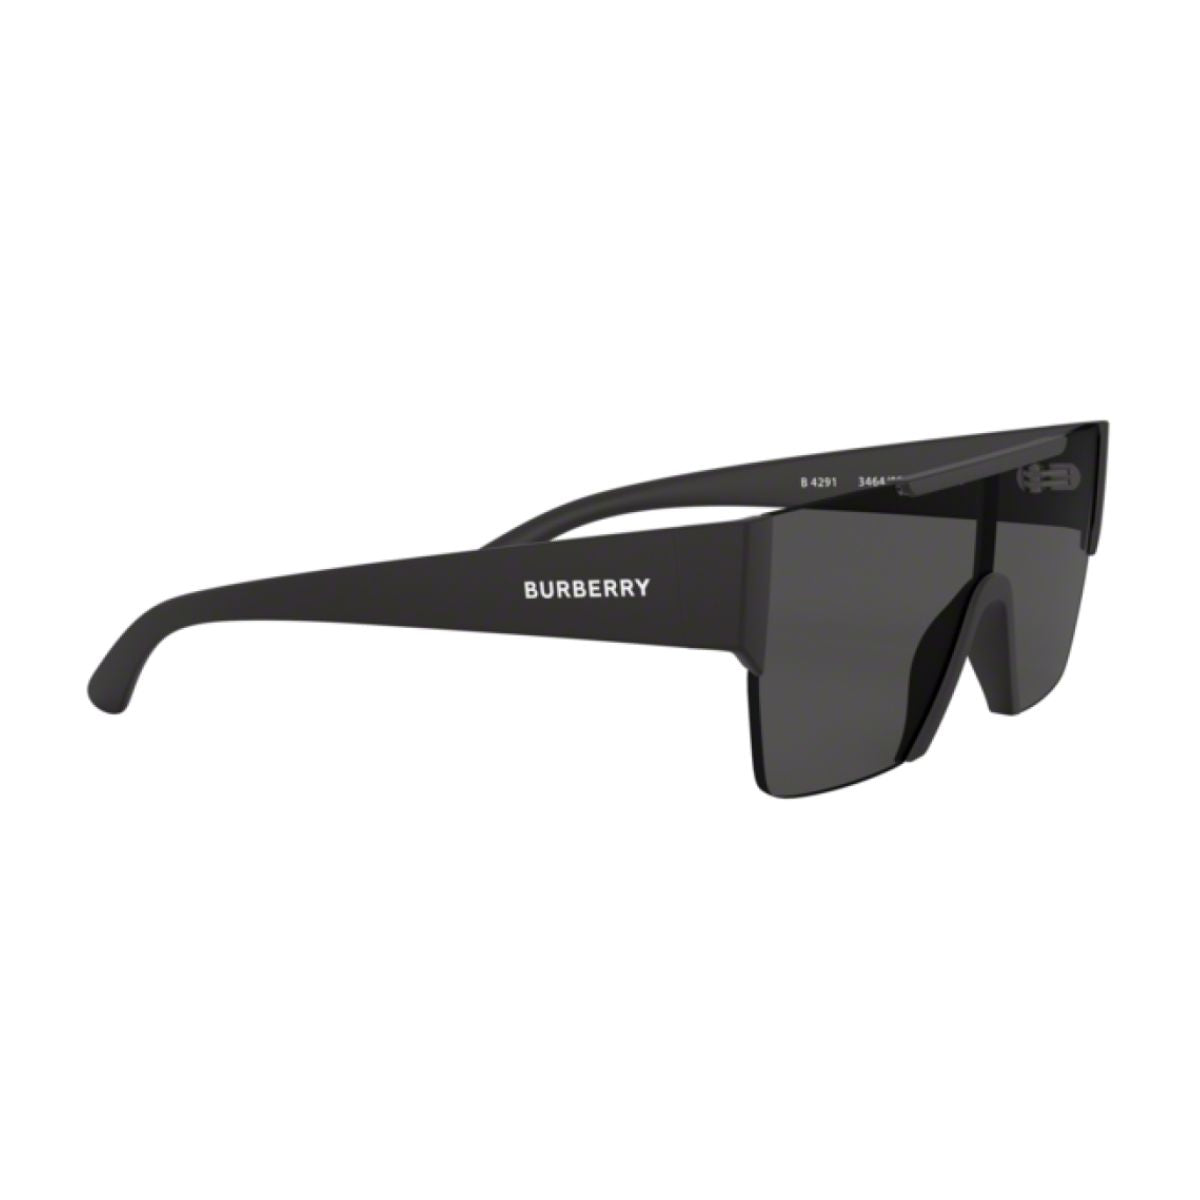 "Burberry 4291 3464/87 Protection Square Sunglasses For Men's At Optorium"